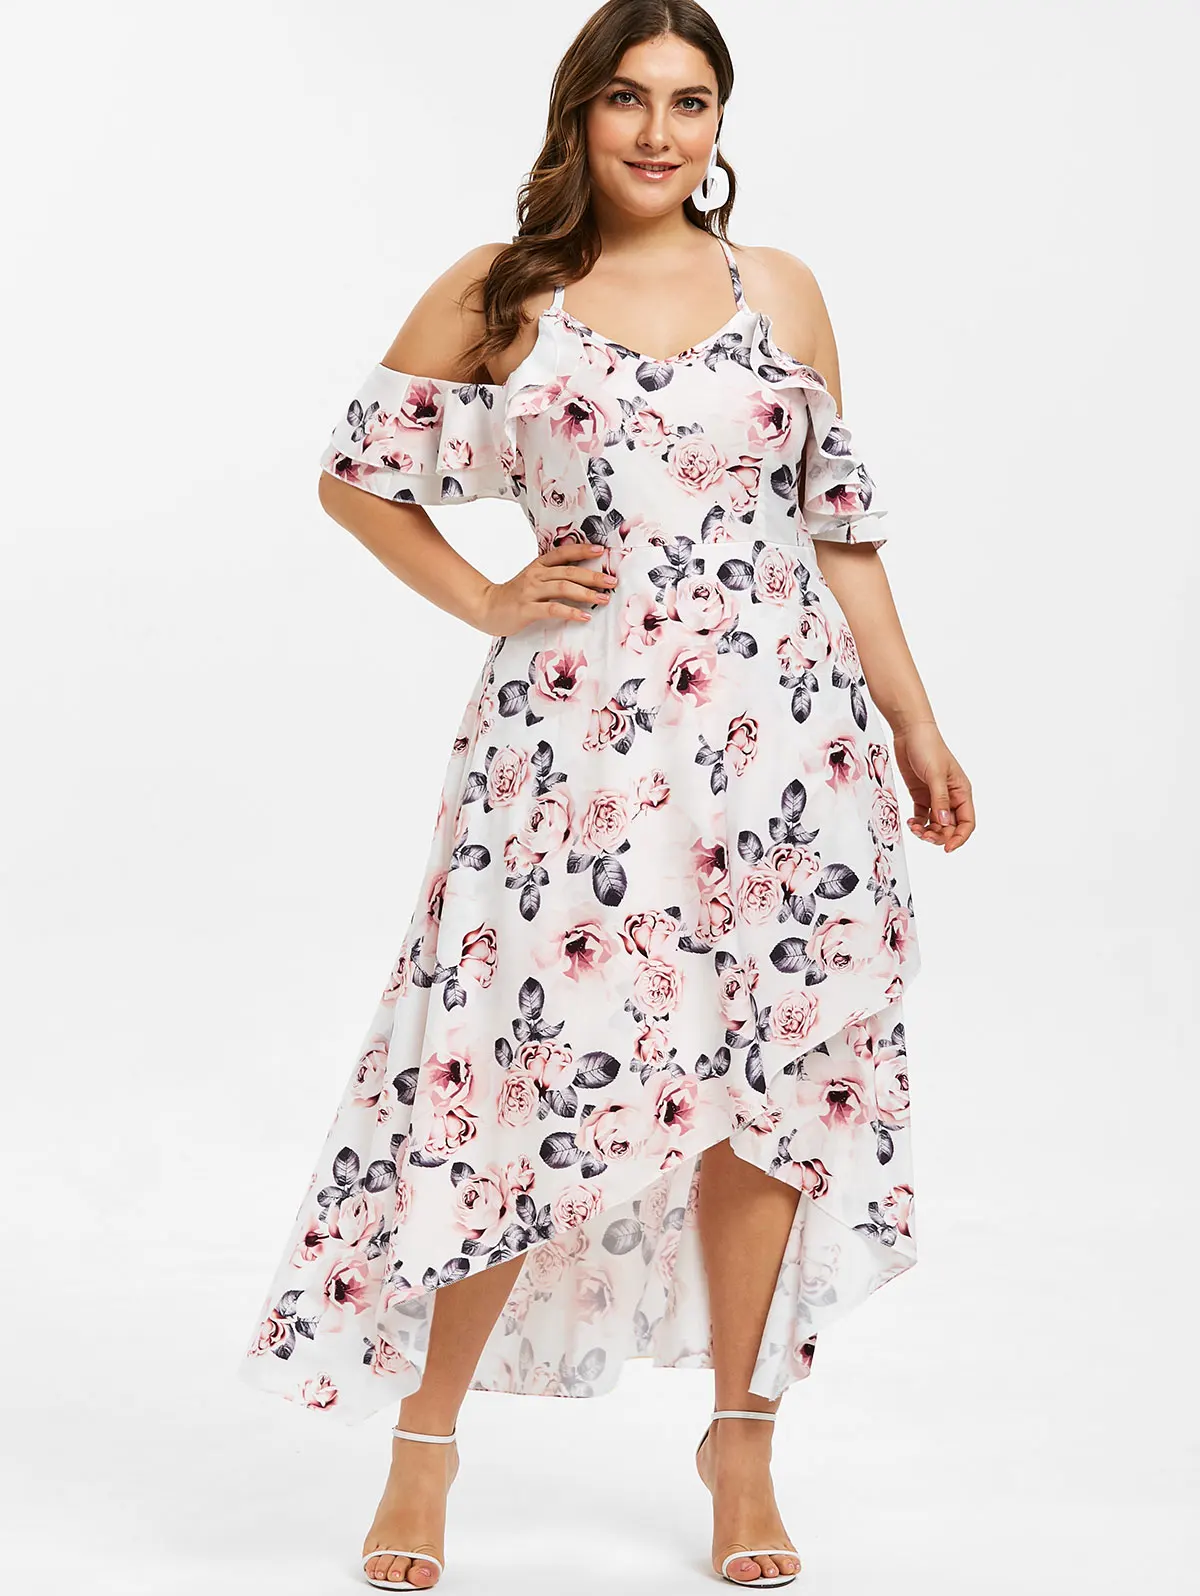 Wipalo Plus Size Floral Print Asymmetrical Dress Ruffle Trim Bohemia High  Low Summer Dress Women Spaghetti Strap Dress Vestidos|Dresses| - AliExpress